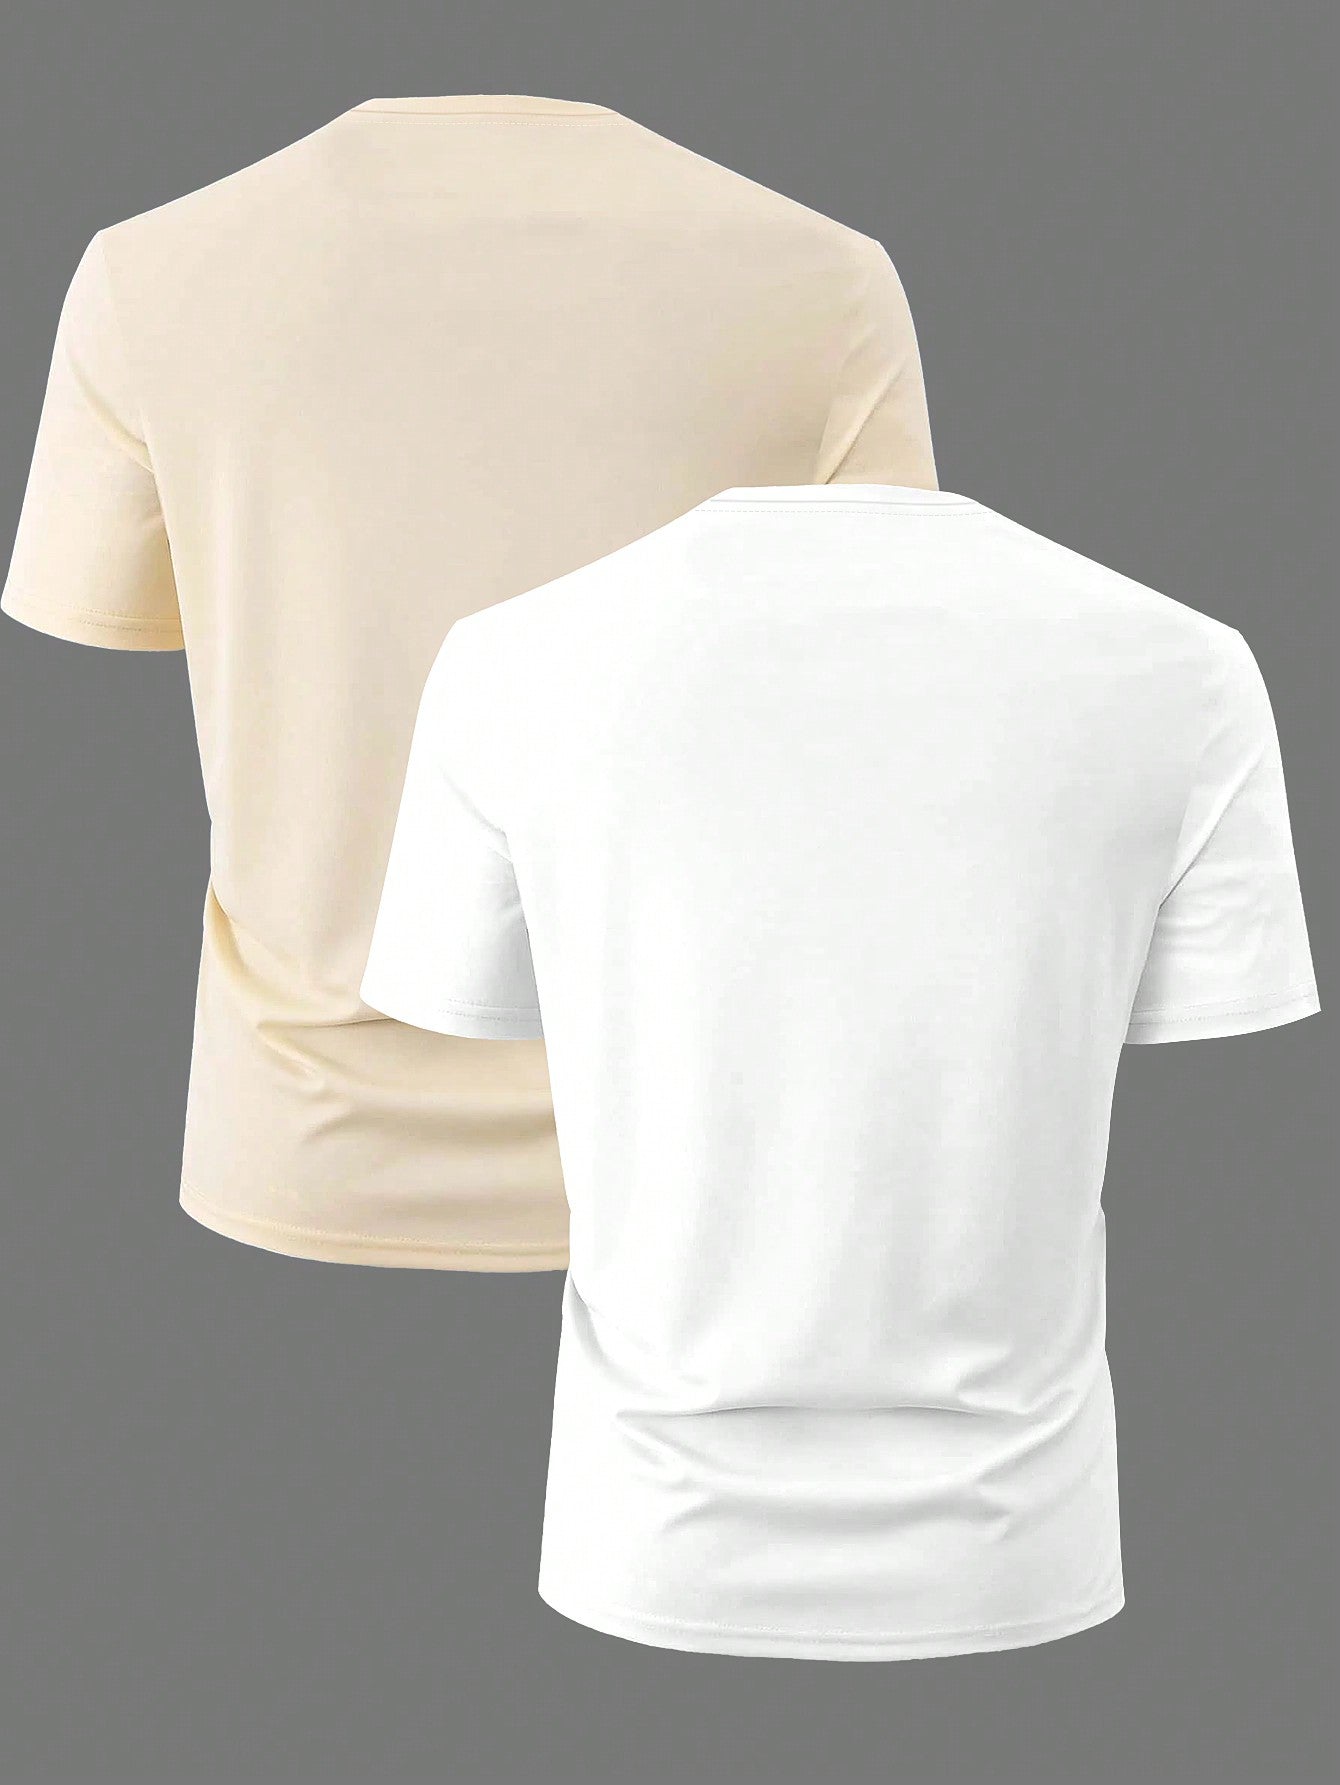 Men's Stylish Casual T Shirt.